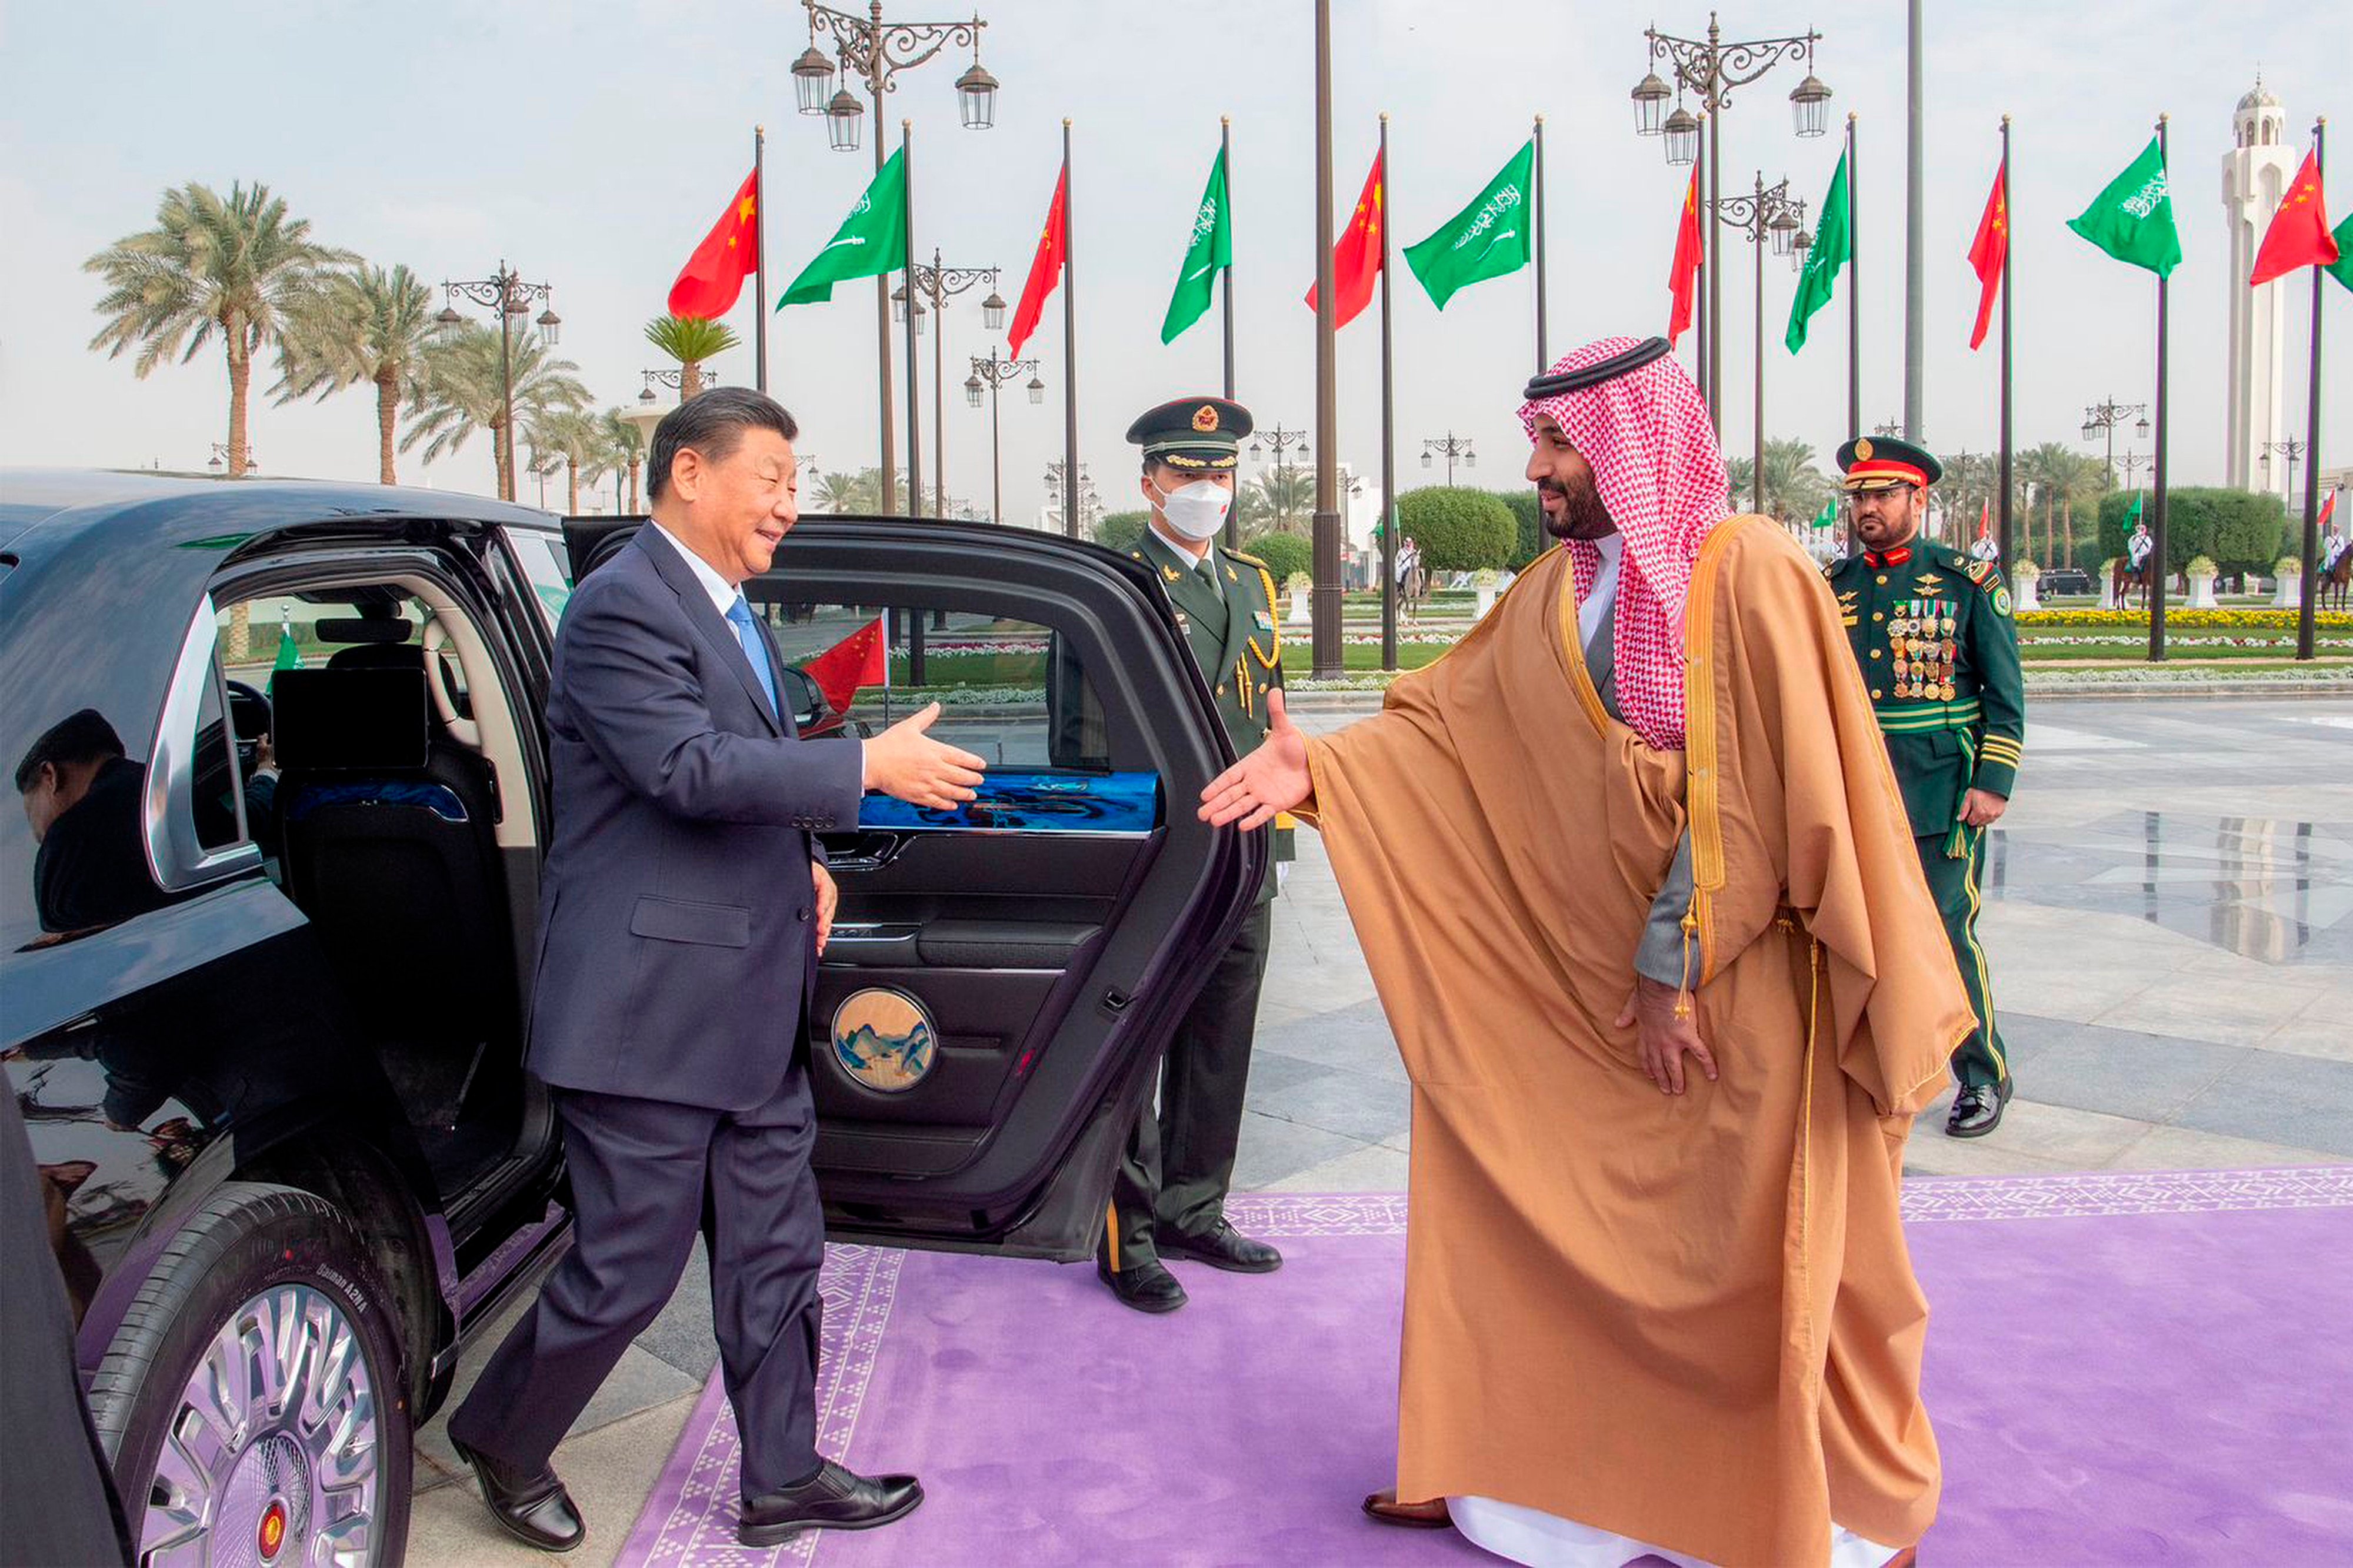 Chinese President Xi Jinping shakes hands with Saudi Crown Prince and Prime Minister Mohammed bin Salman on arriving at Al Yamamah Palace in Riyadh, Saudi Arabia, on December 8. Photo: Saudi Press Agency via AP